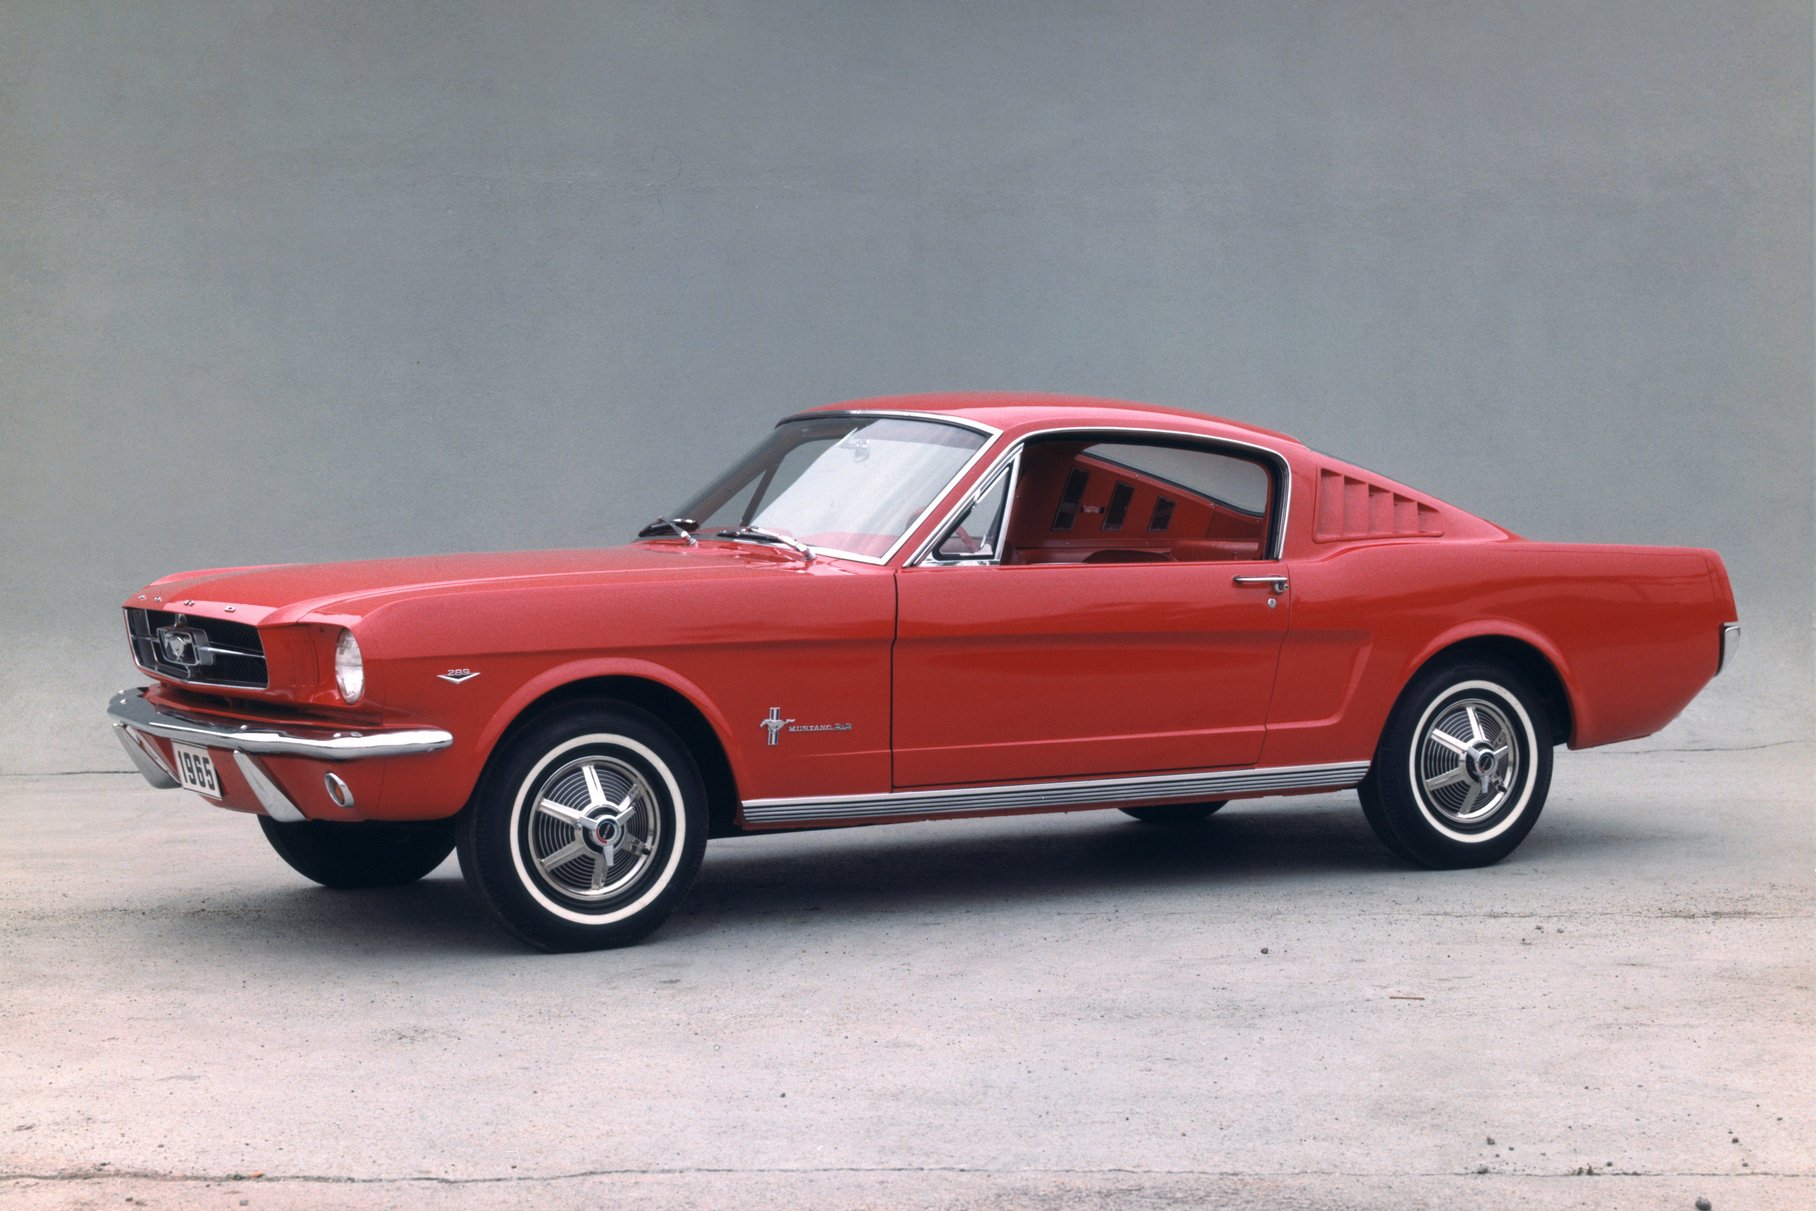 Ford Mustang Fastback 1965. Мустанг 1965 Fastback. Mustang 2+2 Fastback 1965. Ford Mustang Mach 1965. Первые мустанги